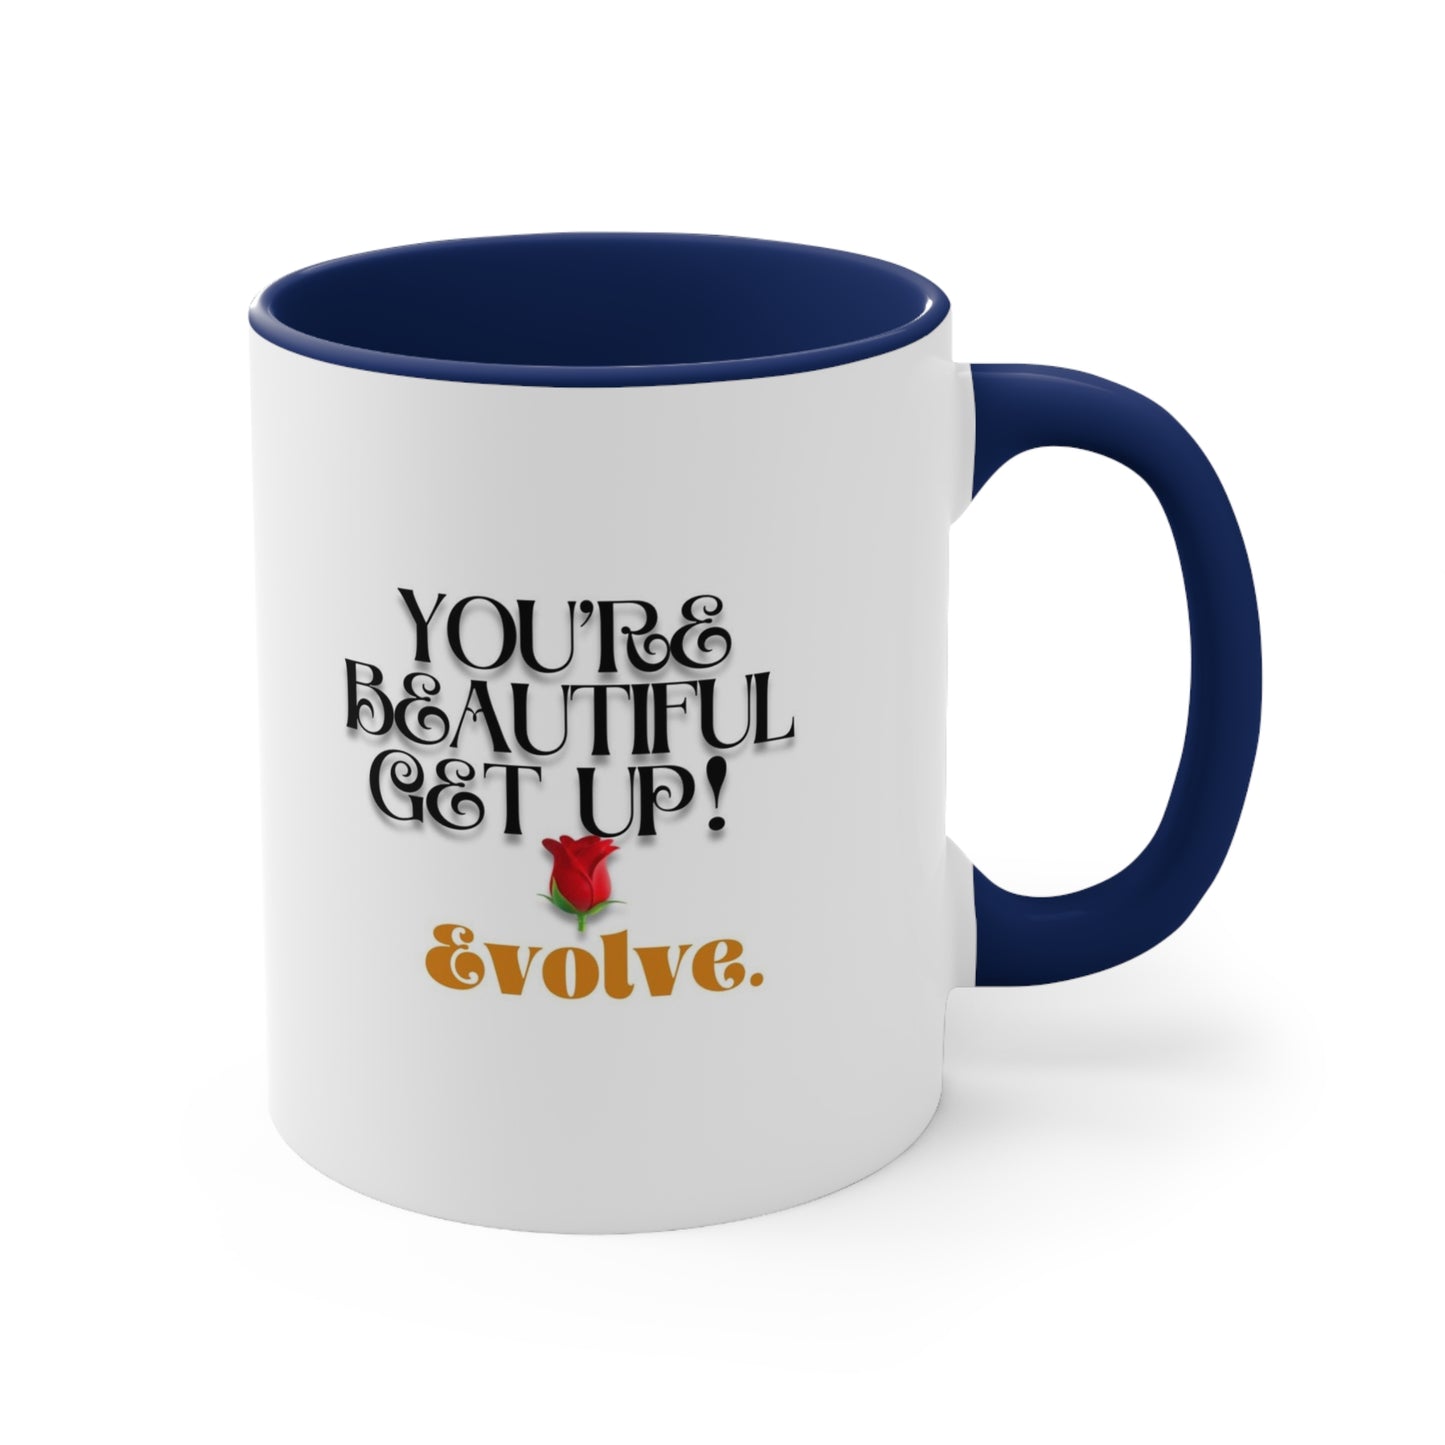 Woman You Are Beautiful Get Up and Evolve  Mug , Accent Coffee Mug, Inspirational Mug Women's Day Gift 11oz